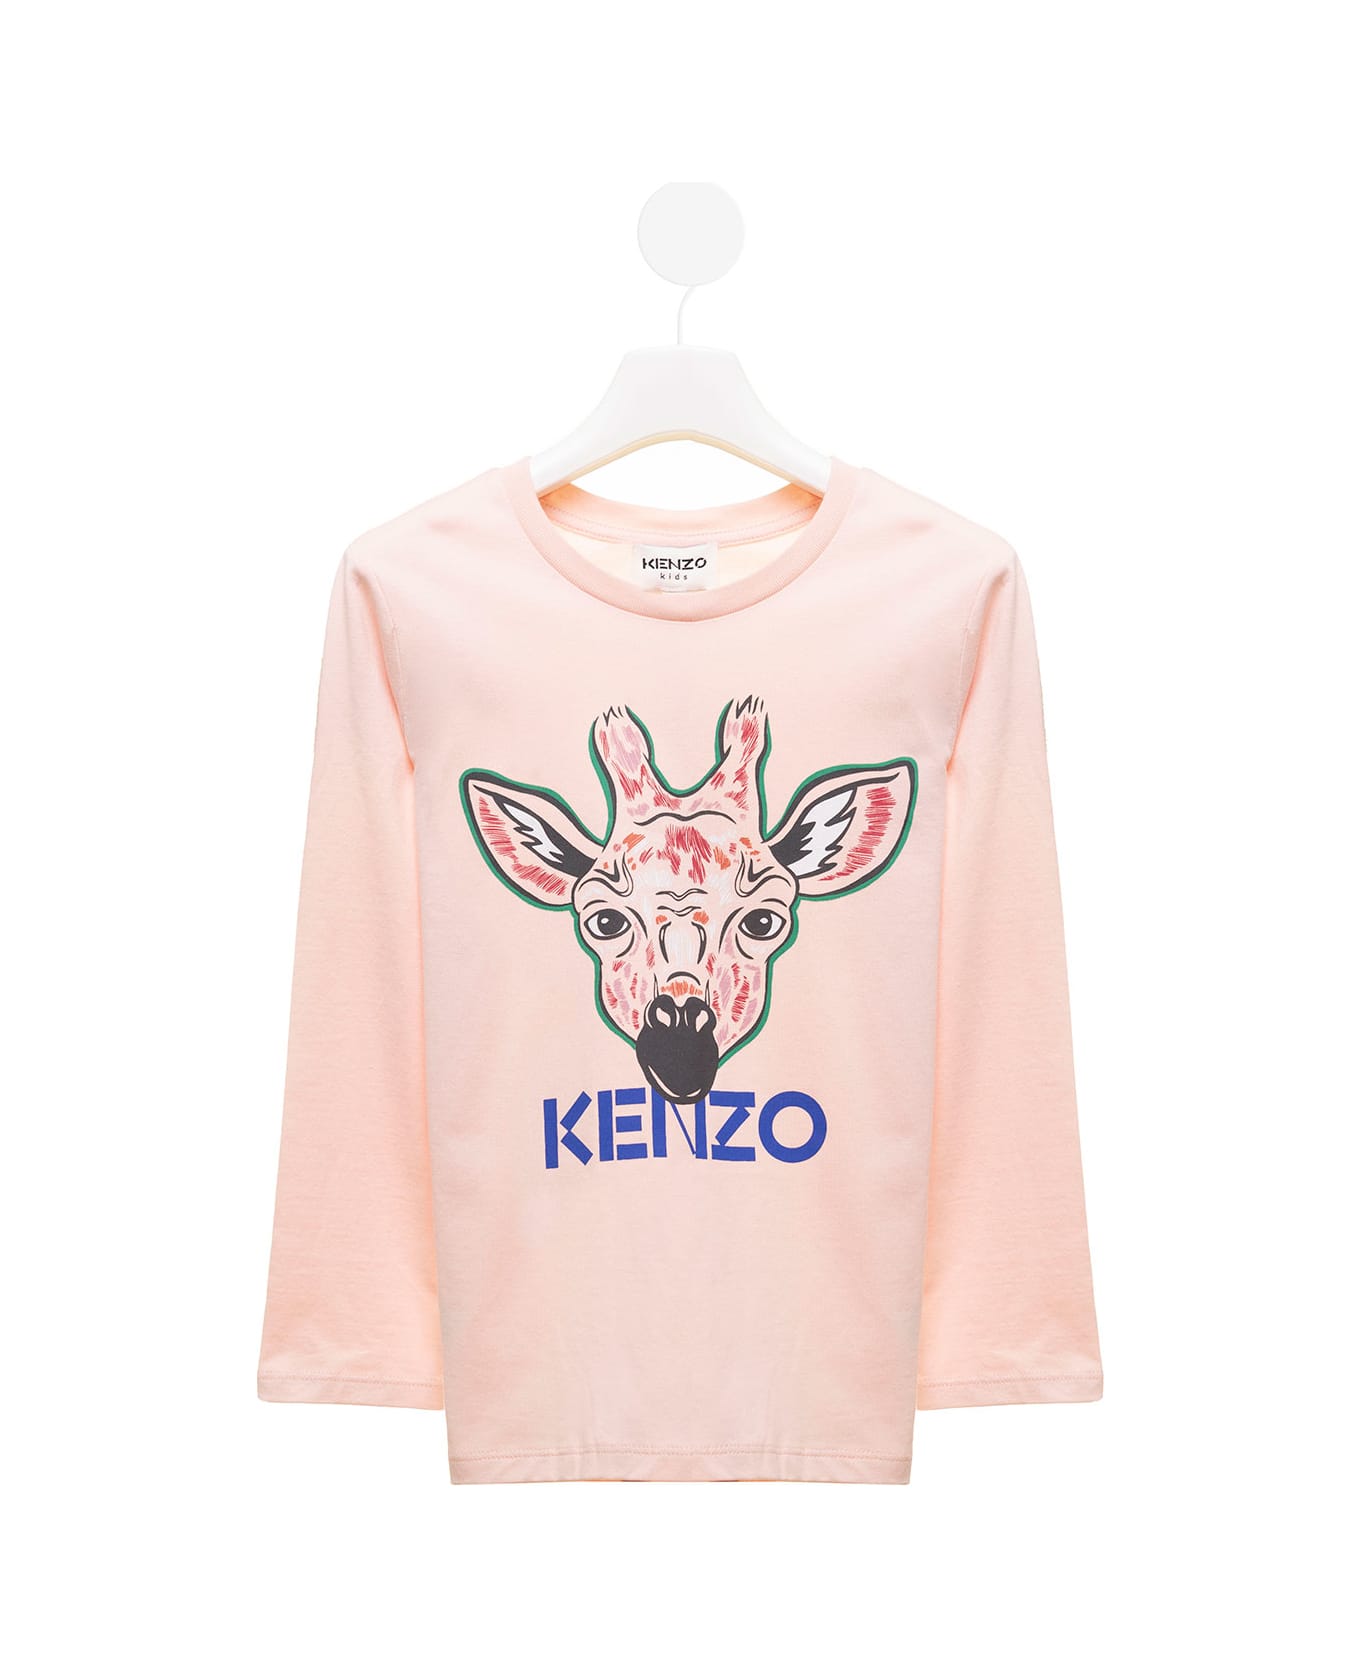 Kenzo Kids K15543t471 - Pink